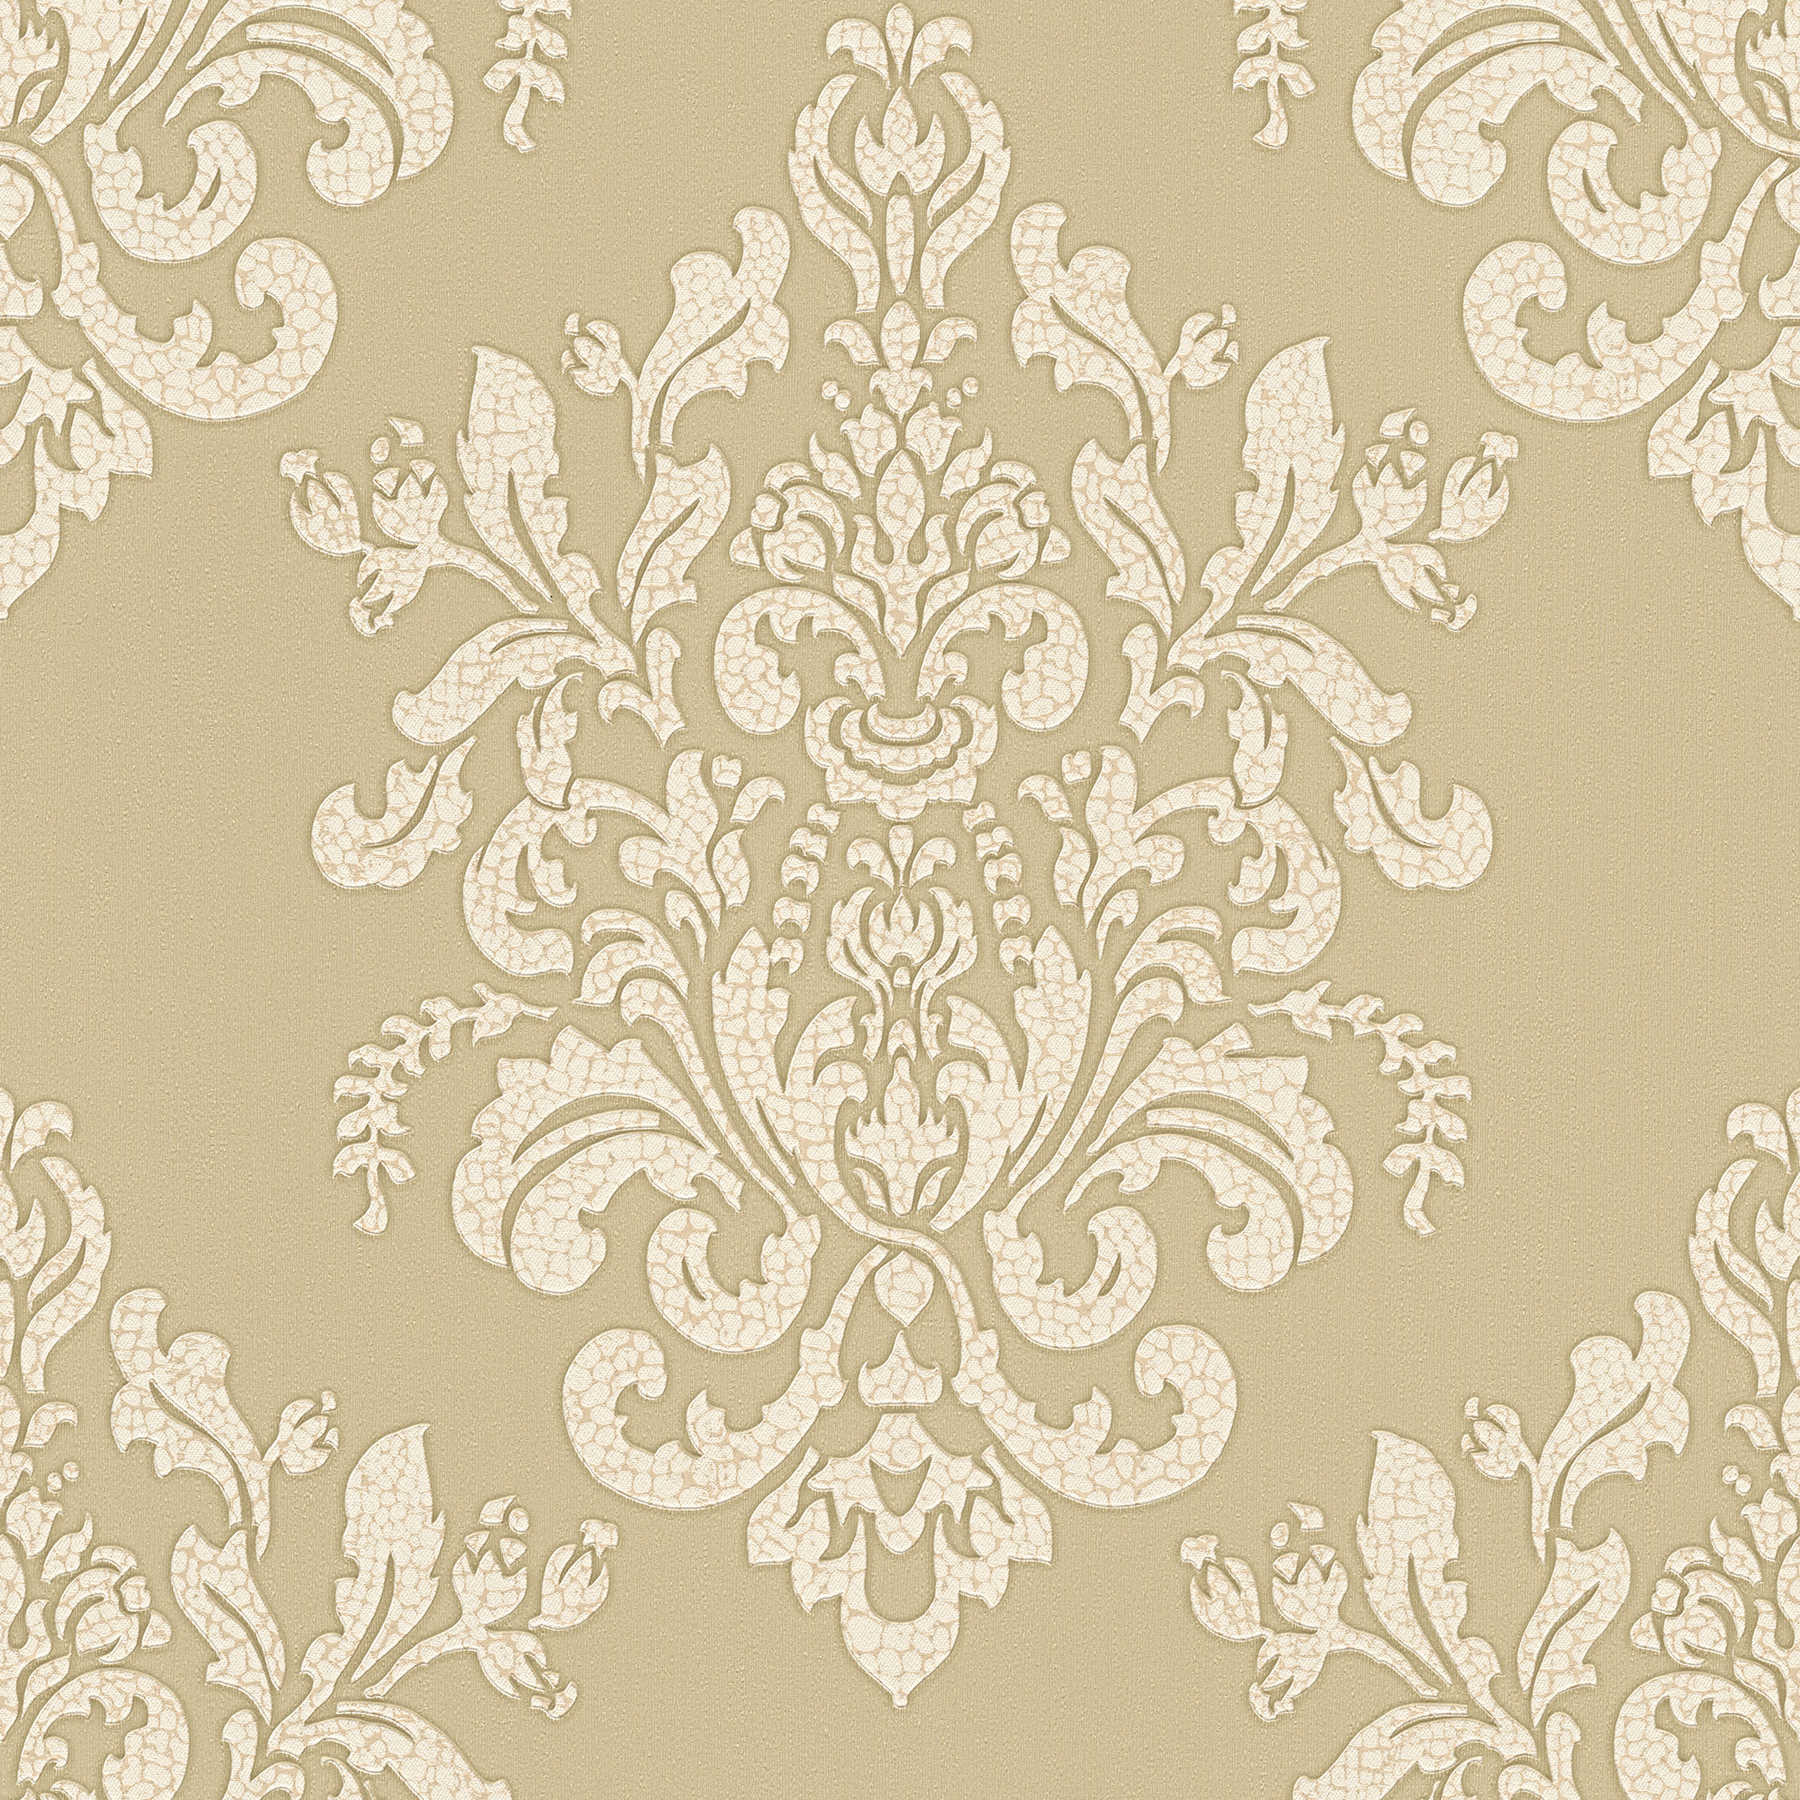 Baroque wallpaper with octopus ornament pattern - metallic
